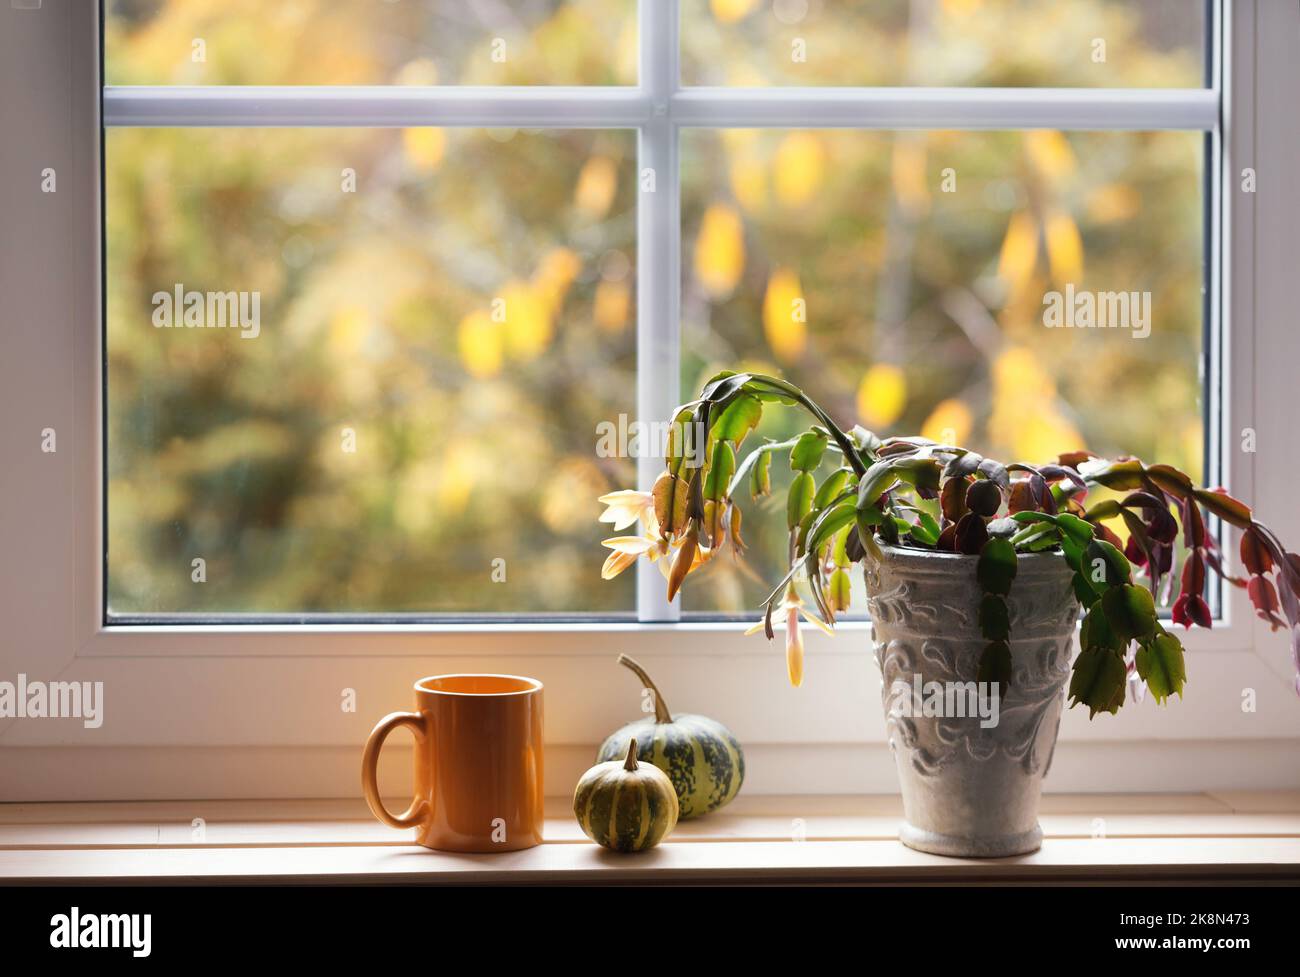 Orange mug, pumpkin and yellow Christmas cactus flower on the windowsill. Window overlooking the autumn yellow garden Stock Photo